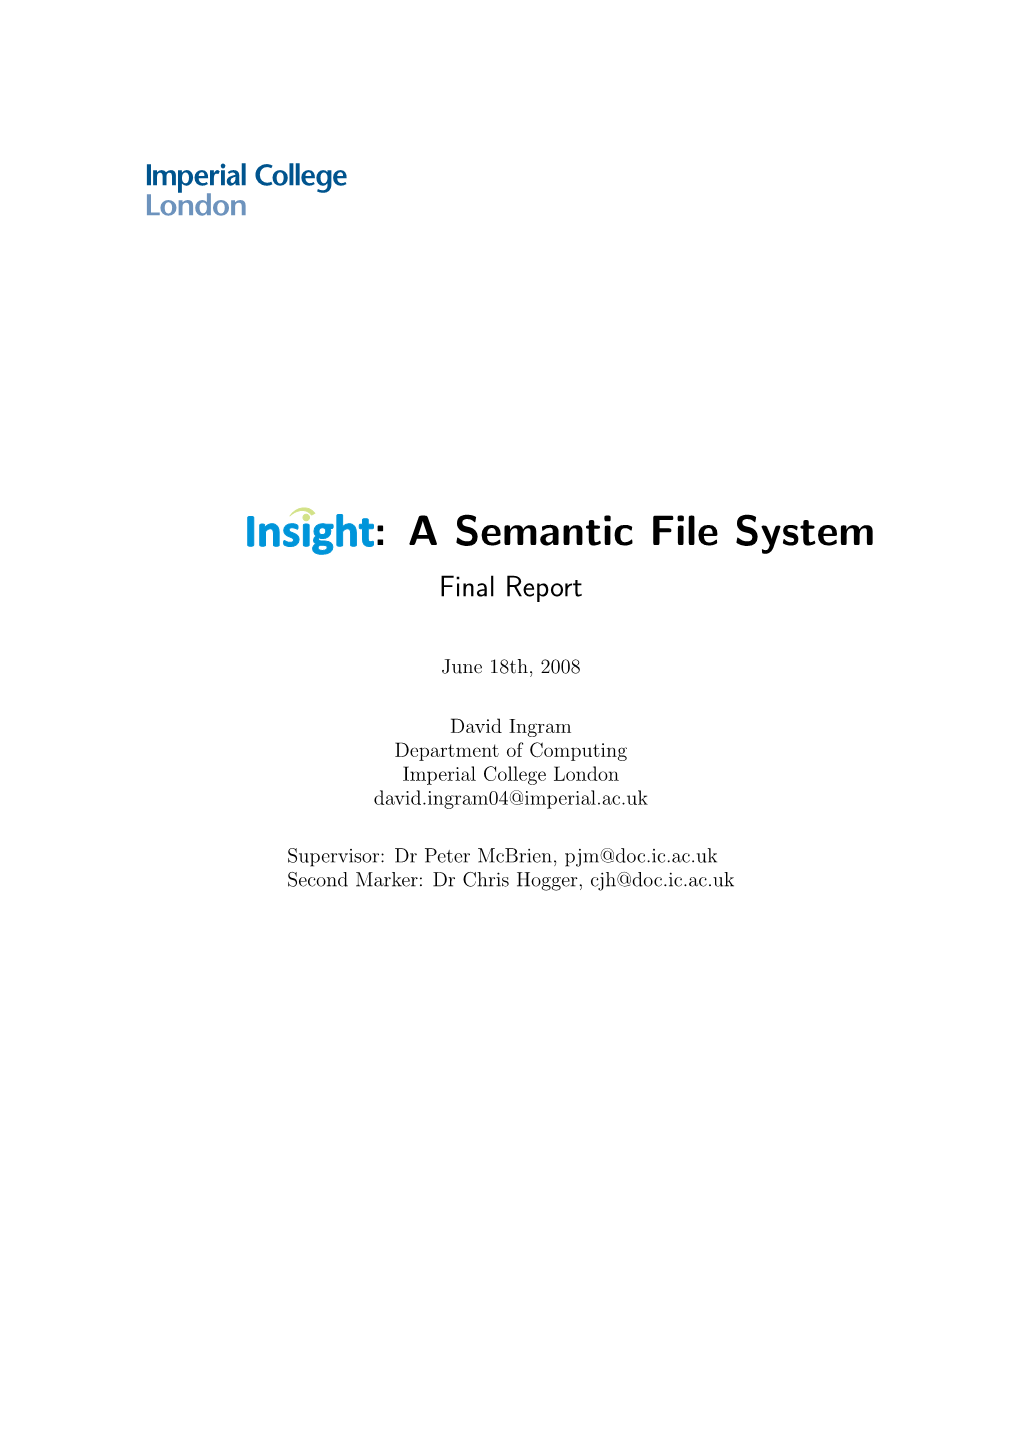 Insight: a Semantic File System 1.1 Motivation